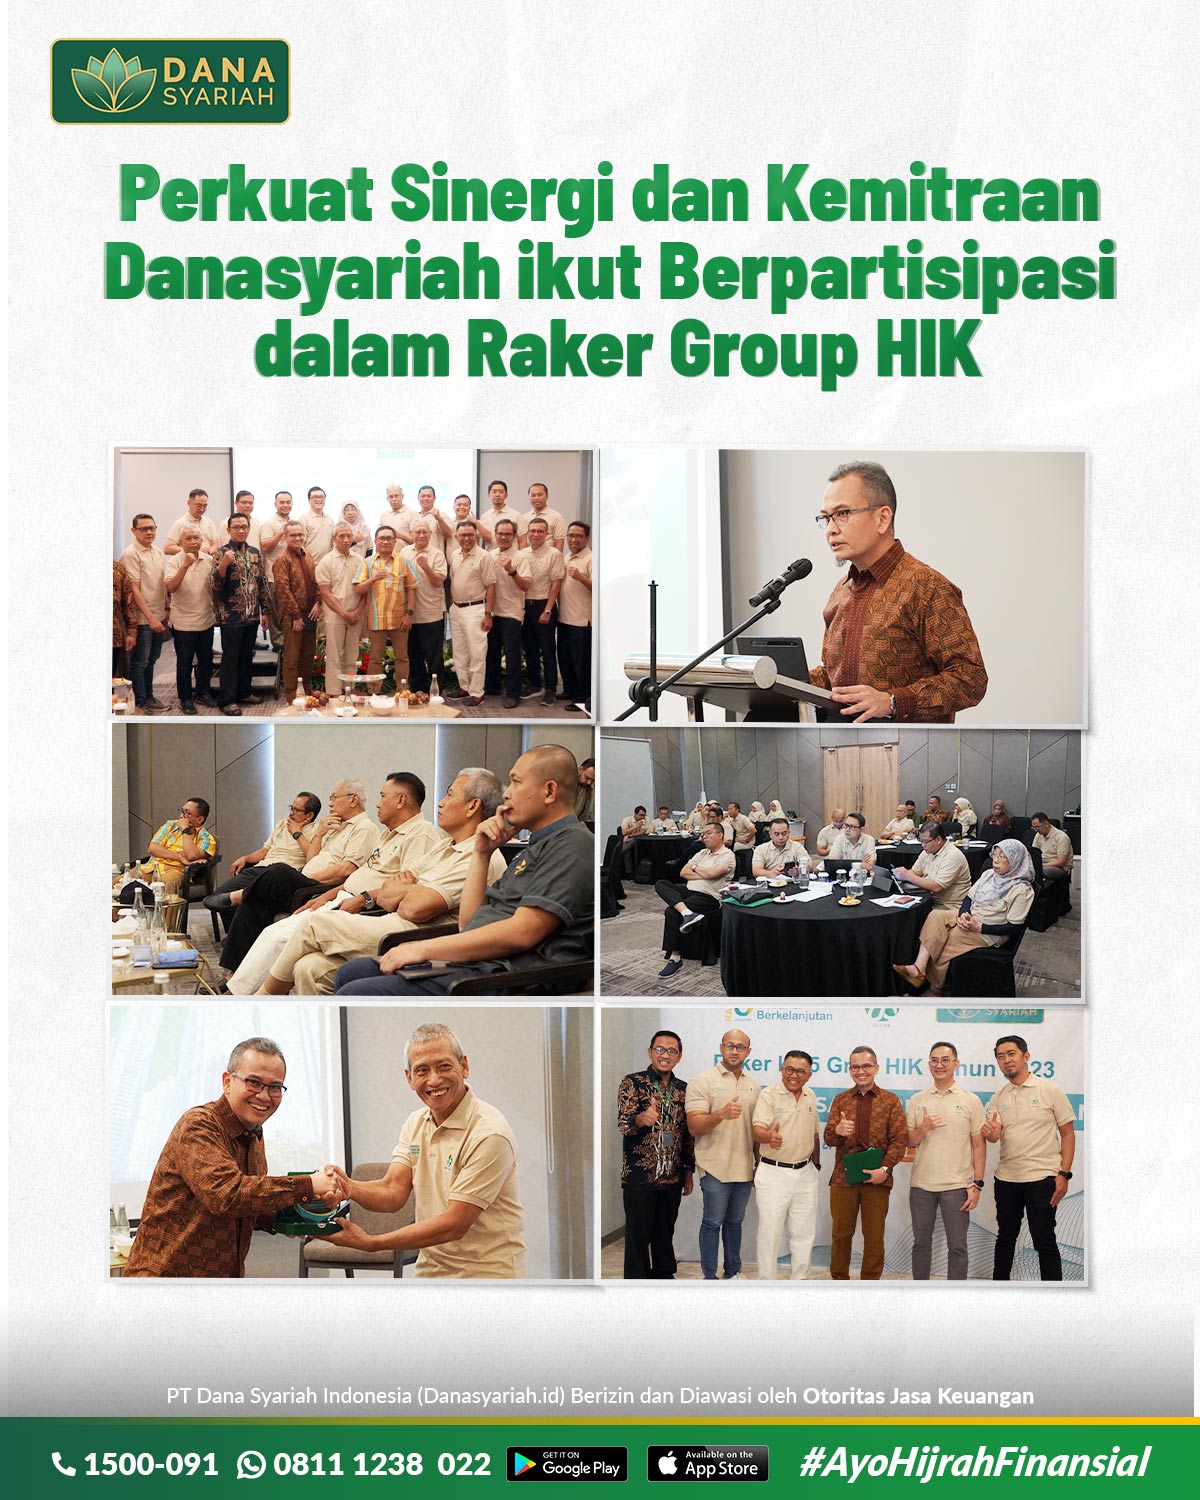 Dana Syariah Perkuat Sinergi dan Kemitraan Danasyariah ikut Berpartisipasi dalam Raker Group HIK